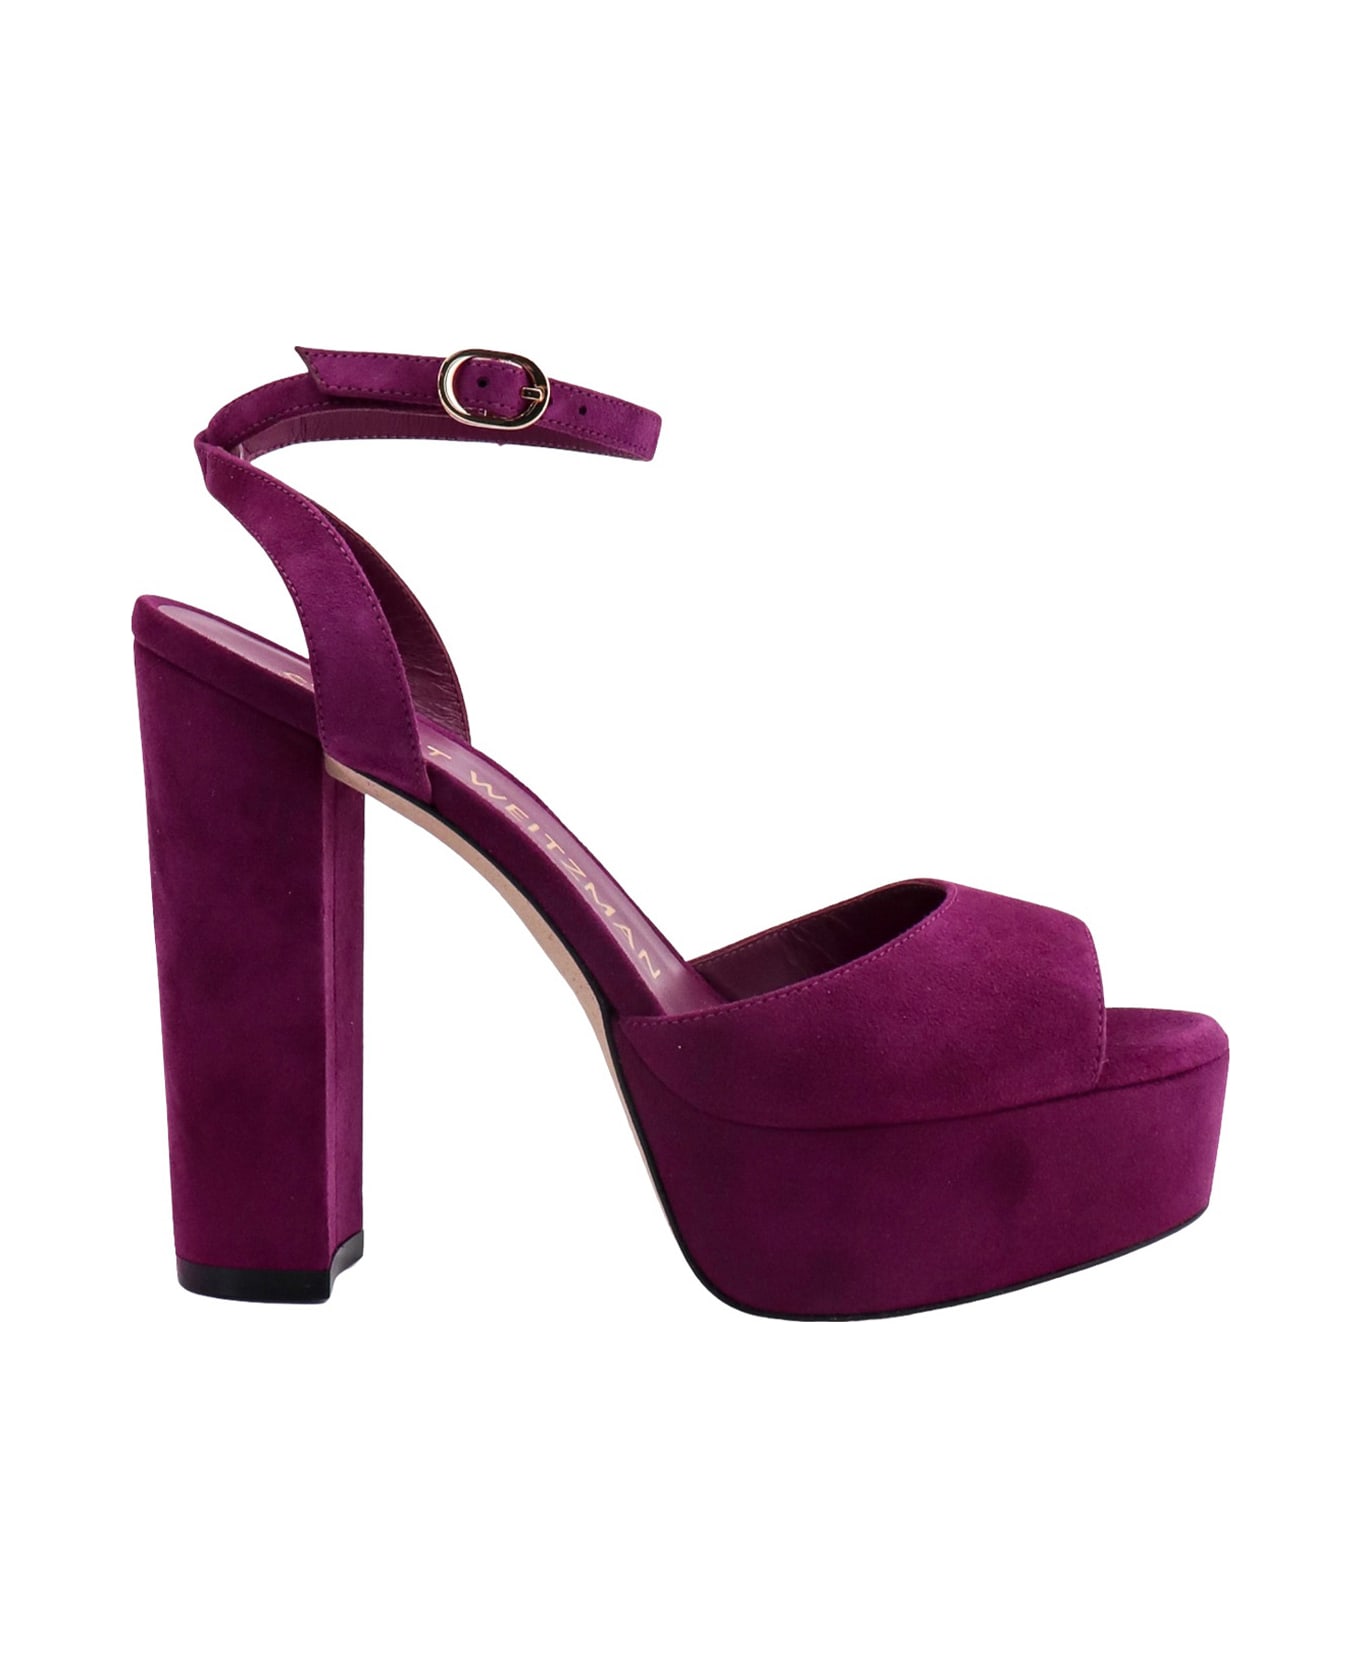 Stuart Weitzman Sandals - Purple